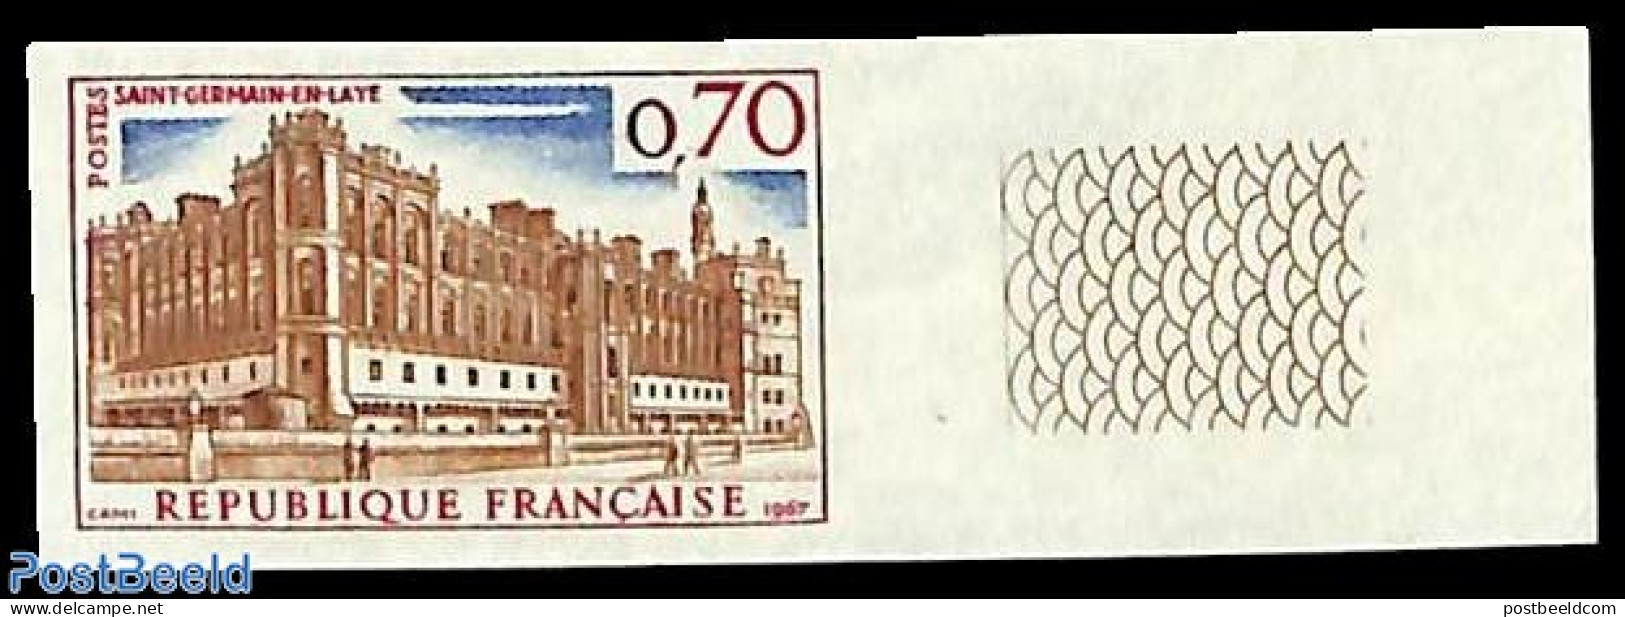 France 1967 St Germain En Laye 1v, Imperforated, Mint NH, Art - Castles & Fortifications - Unused Stamps